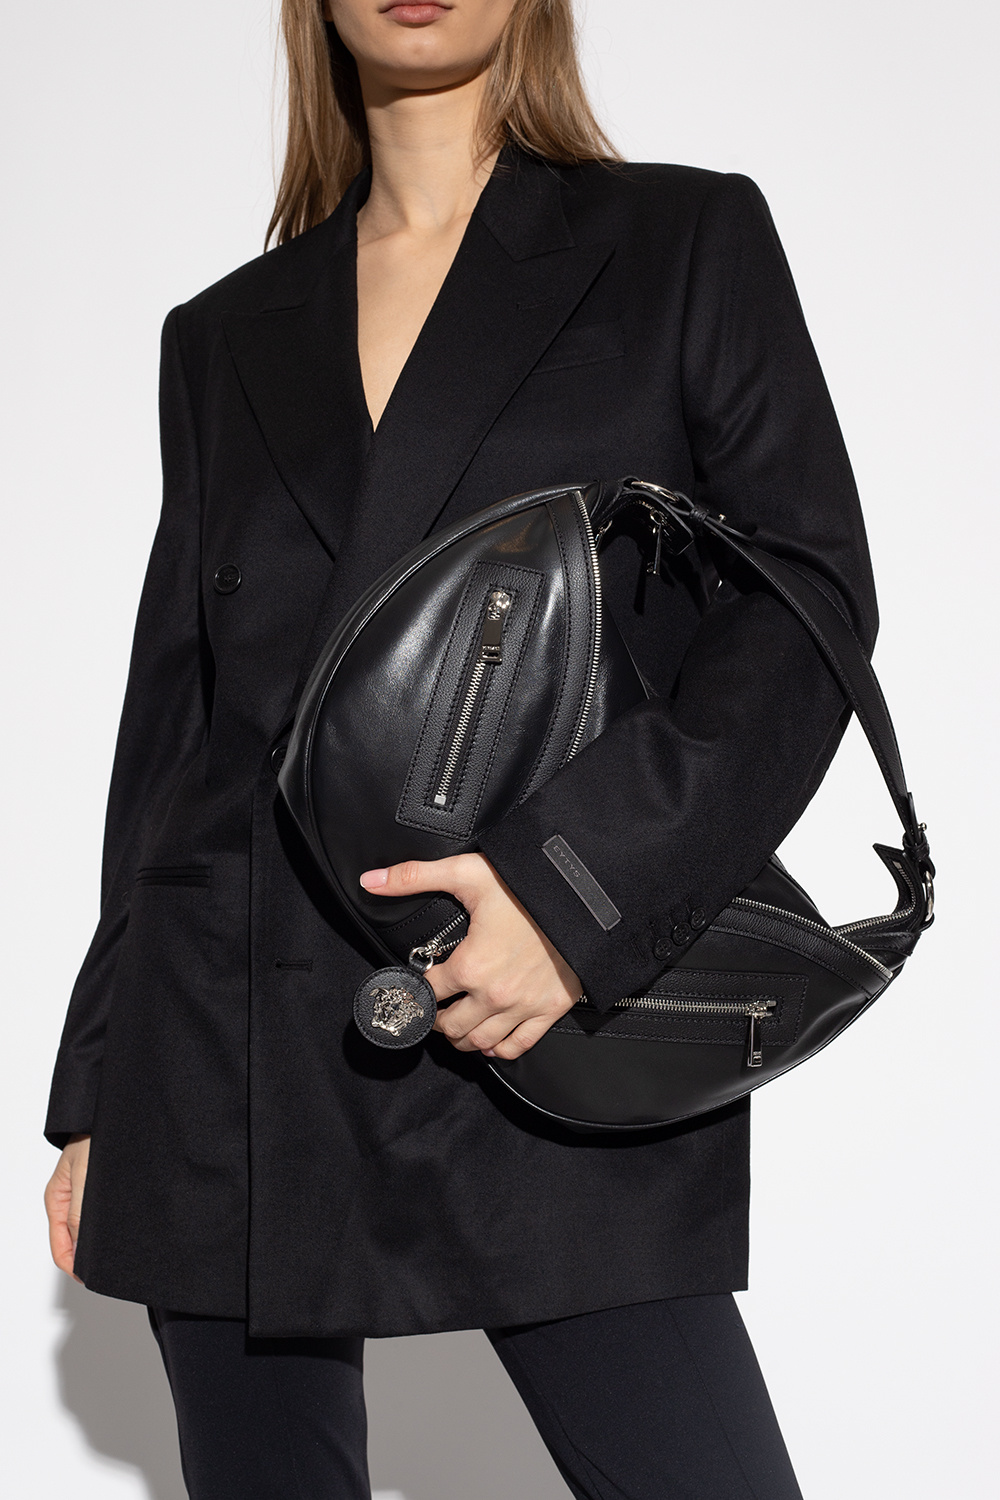 Versace ‘Repeat’ hobo shoulder bag